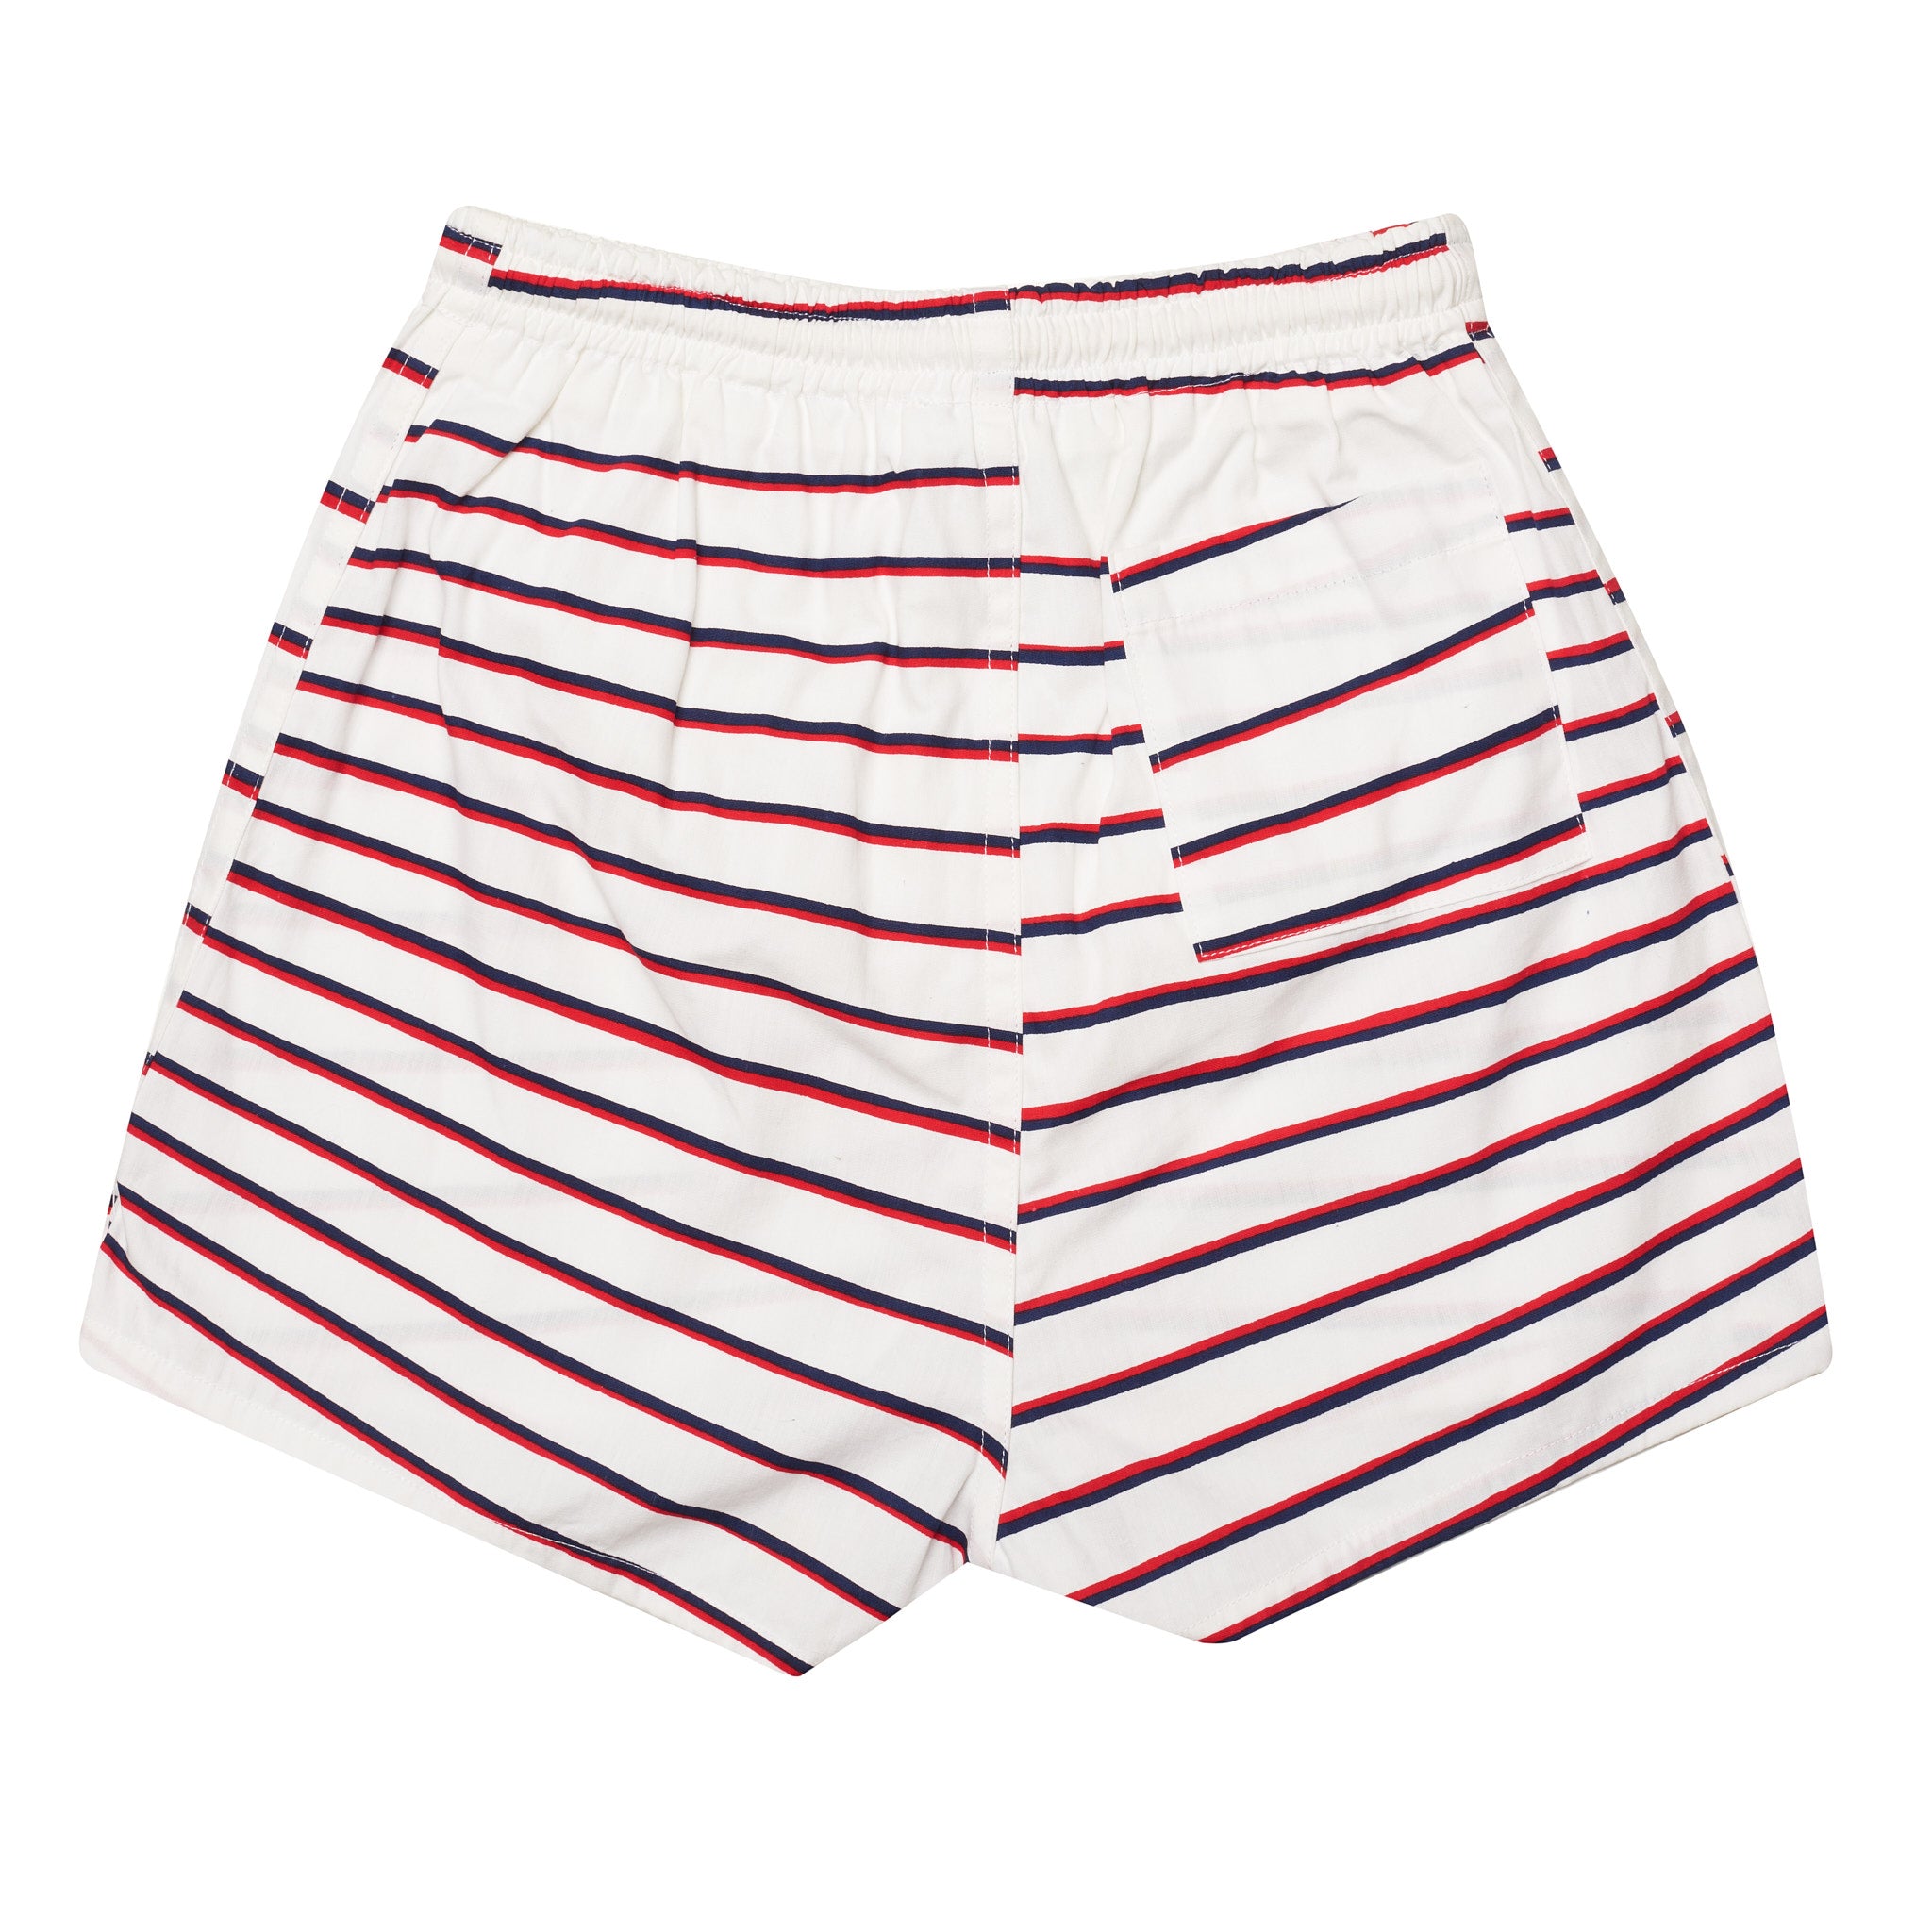 RUBINACCI Napoli White Striped Cotton Bathing Suit Swim Shorts Trunks NEW XS